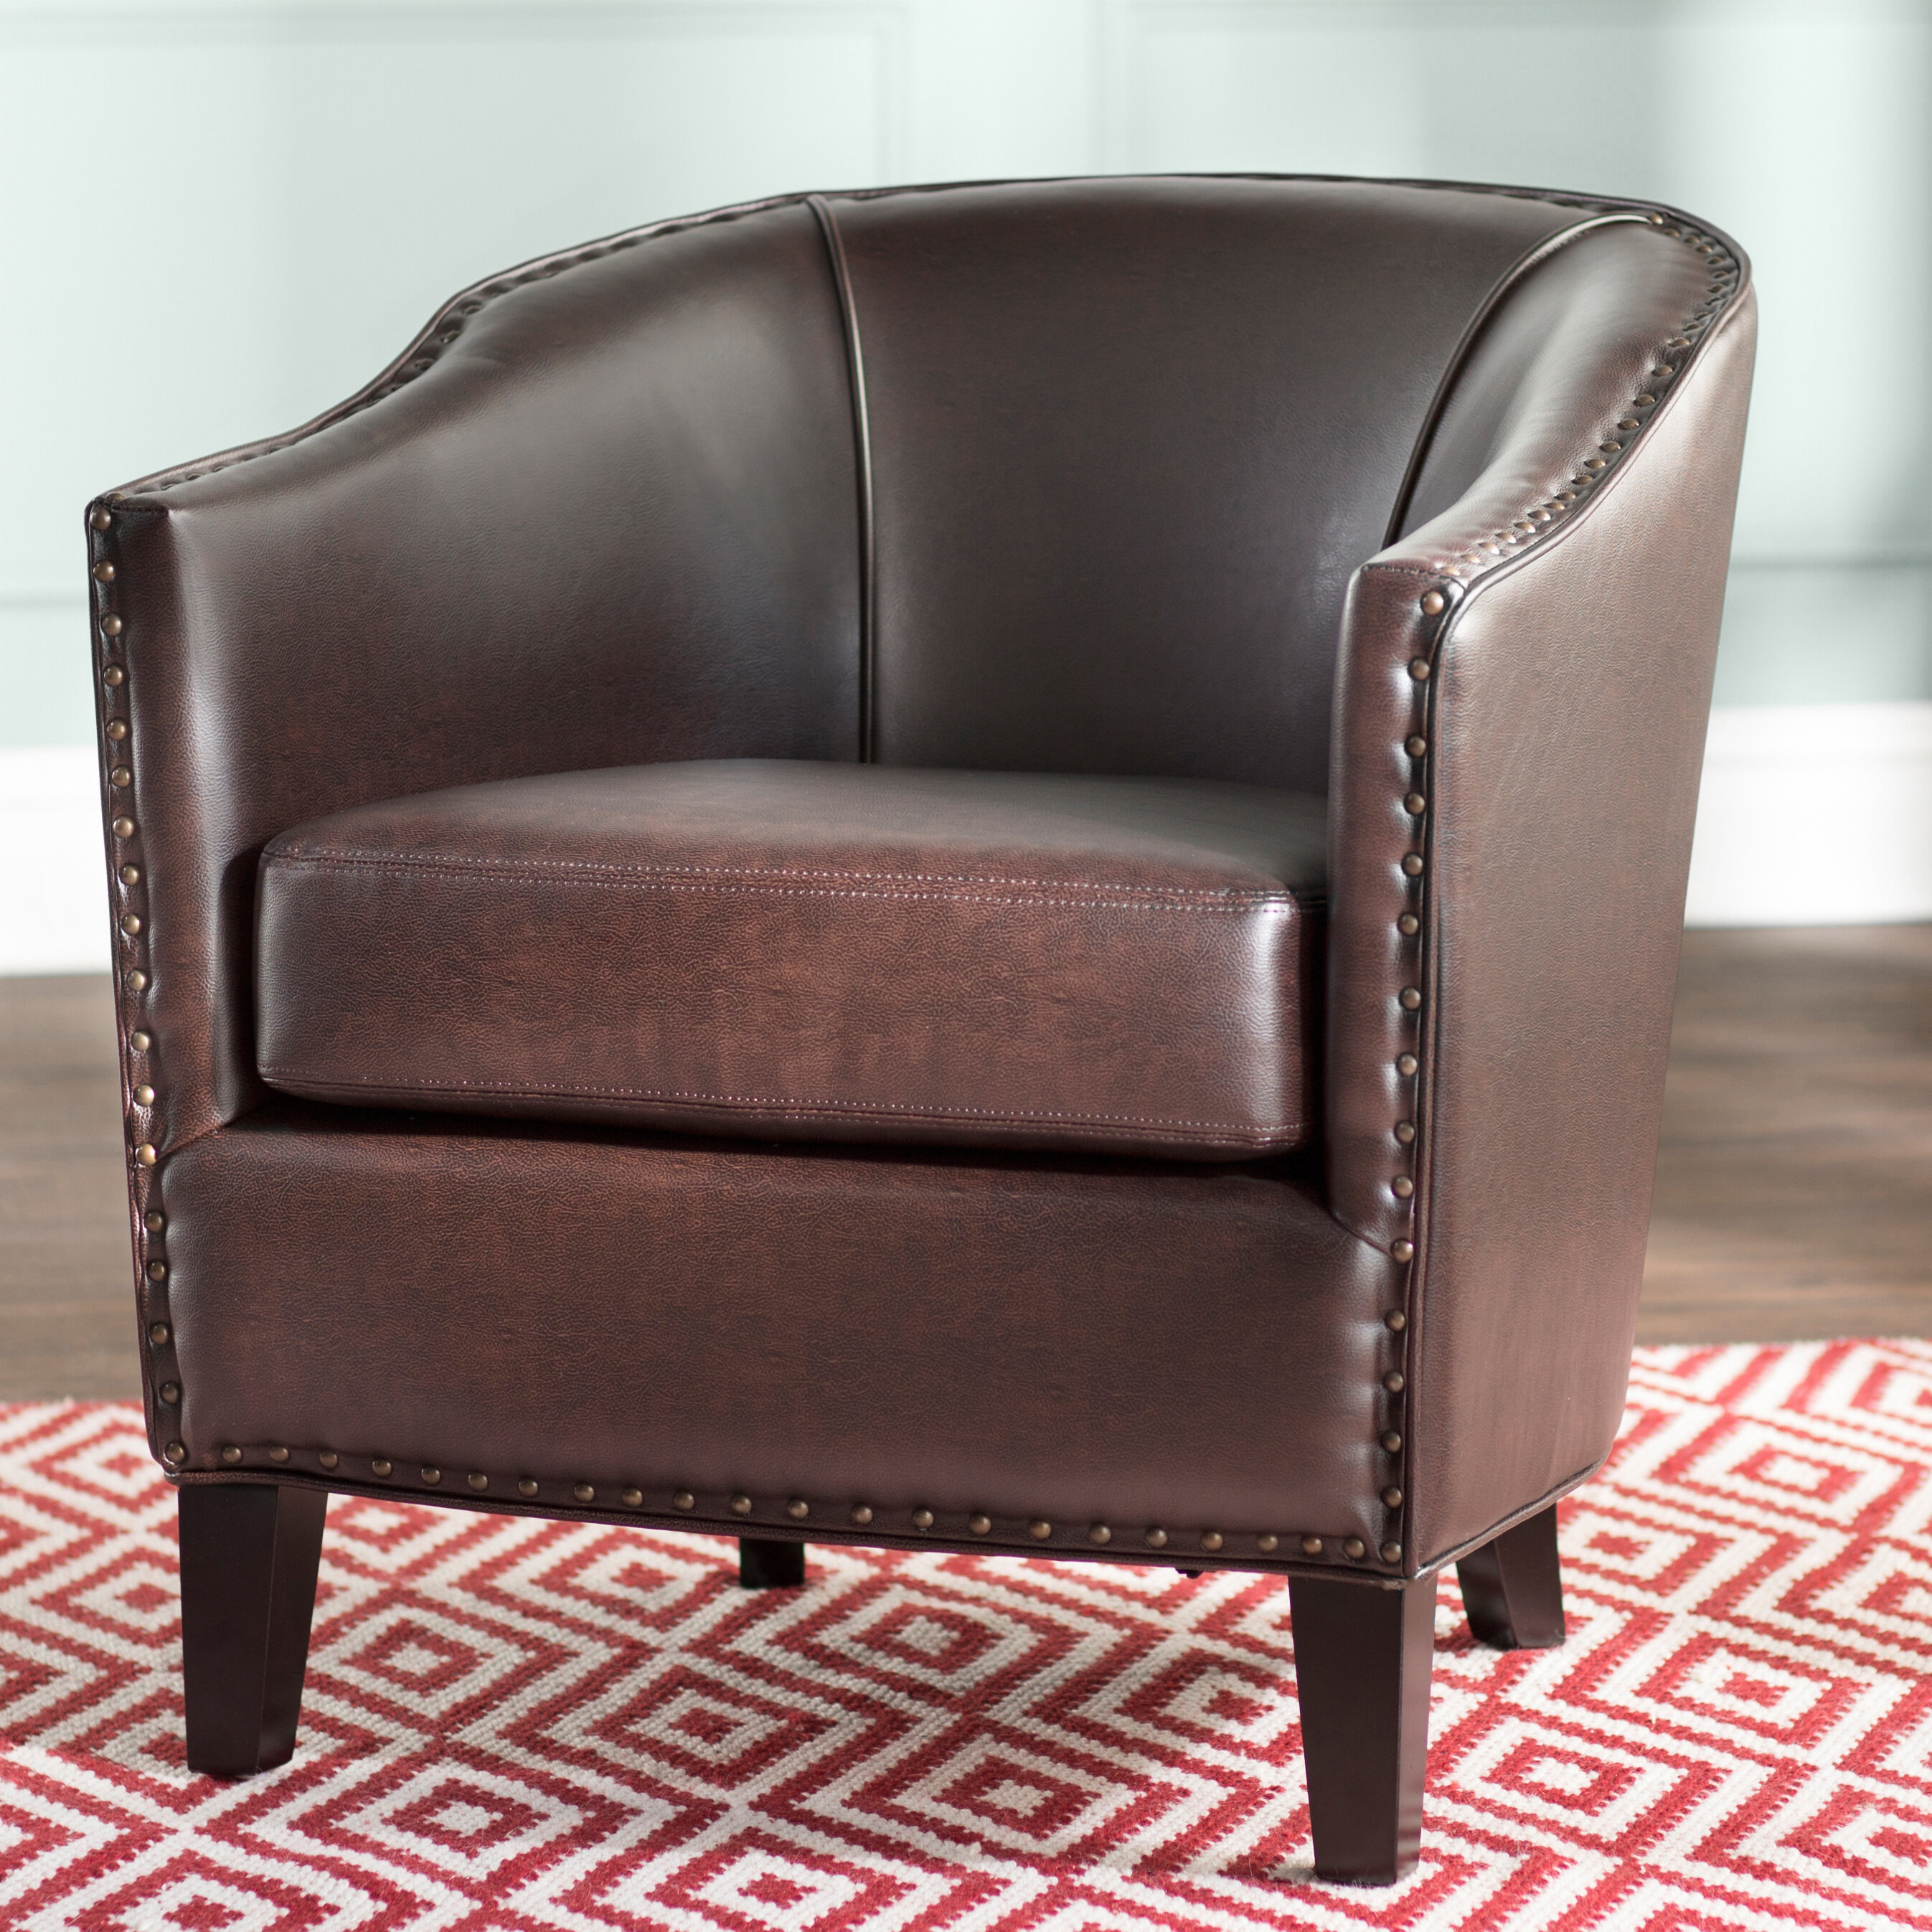 Aous 31.75” Wide Barrel Chair